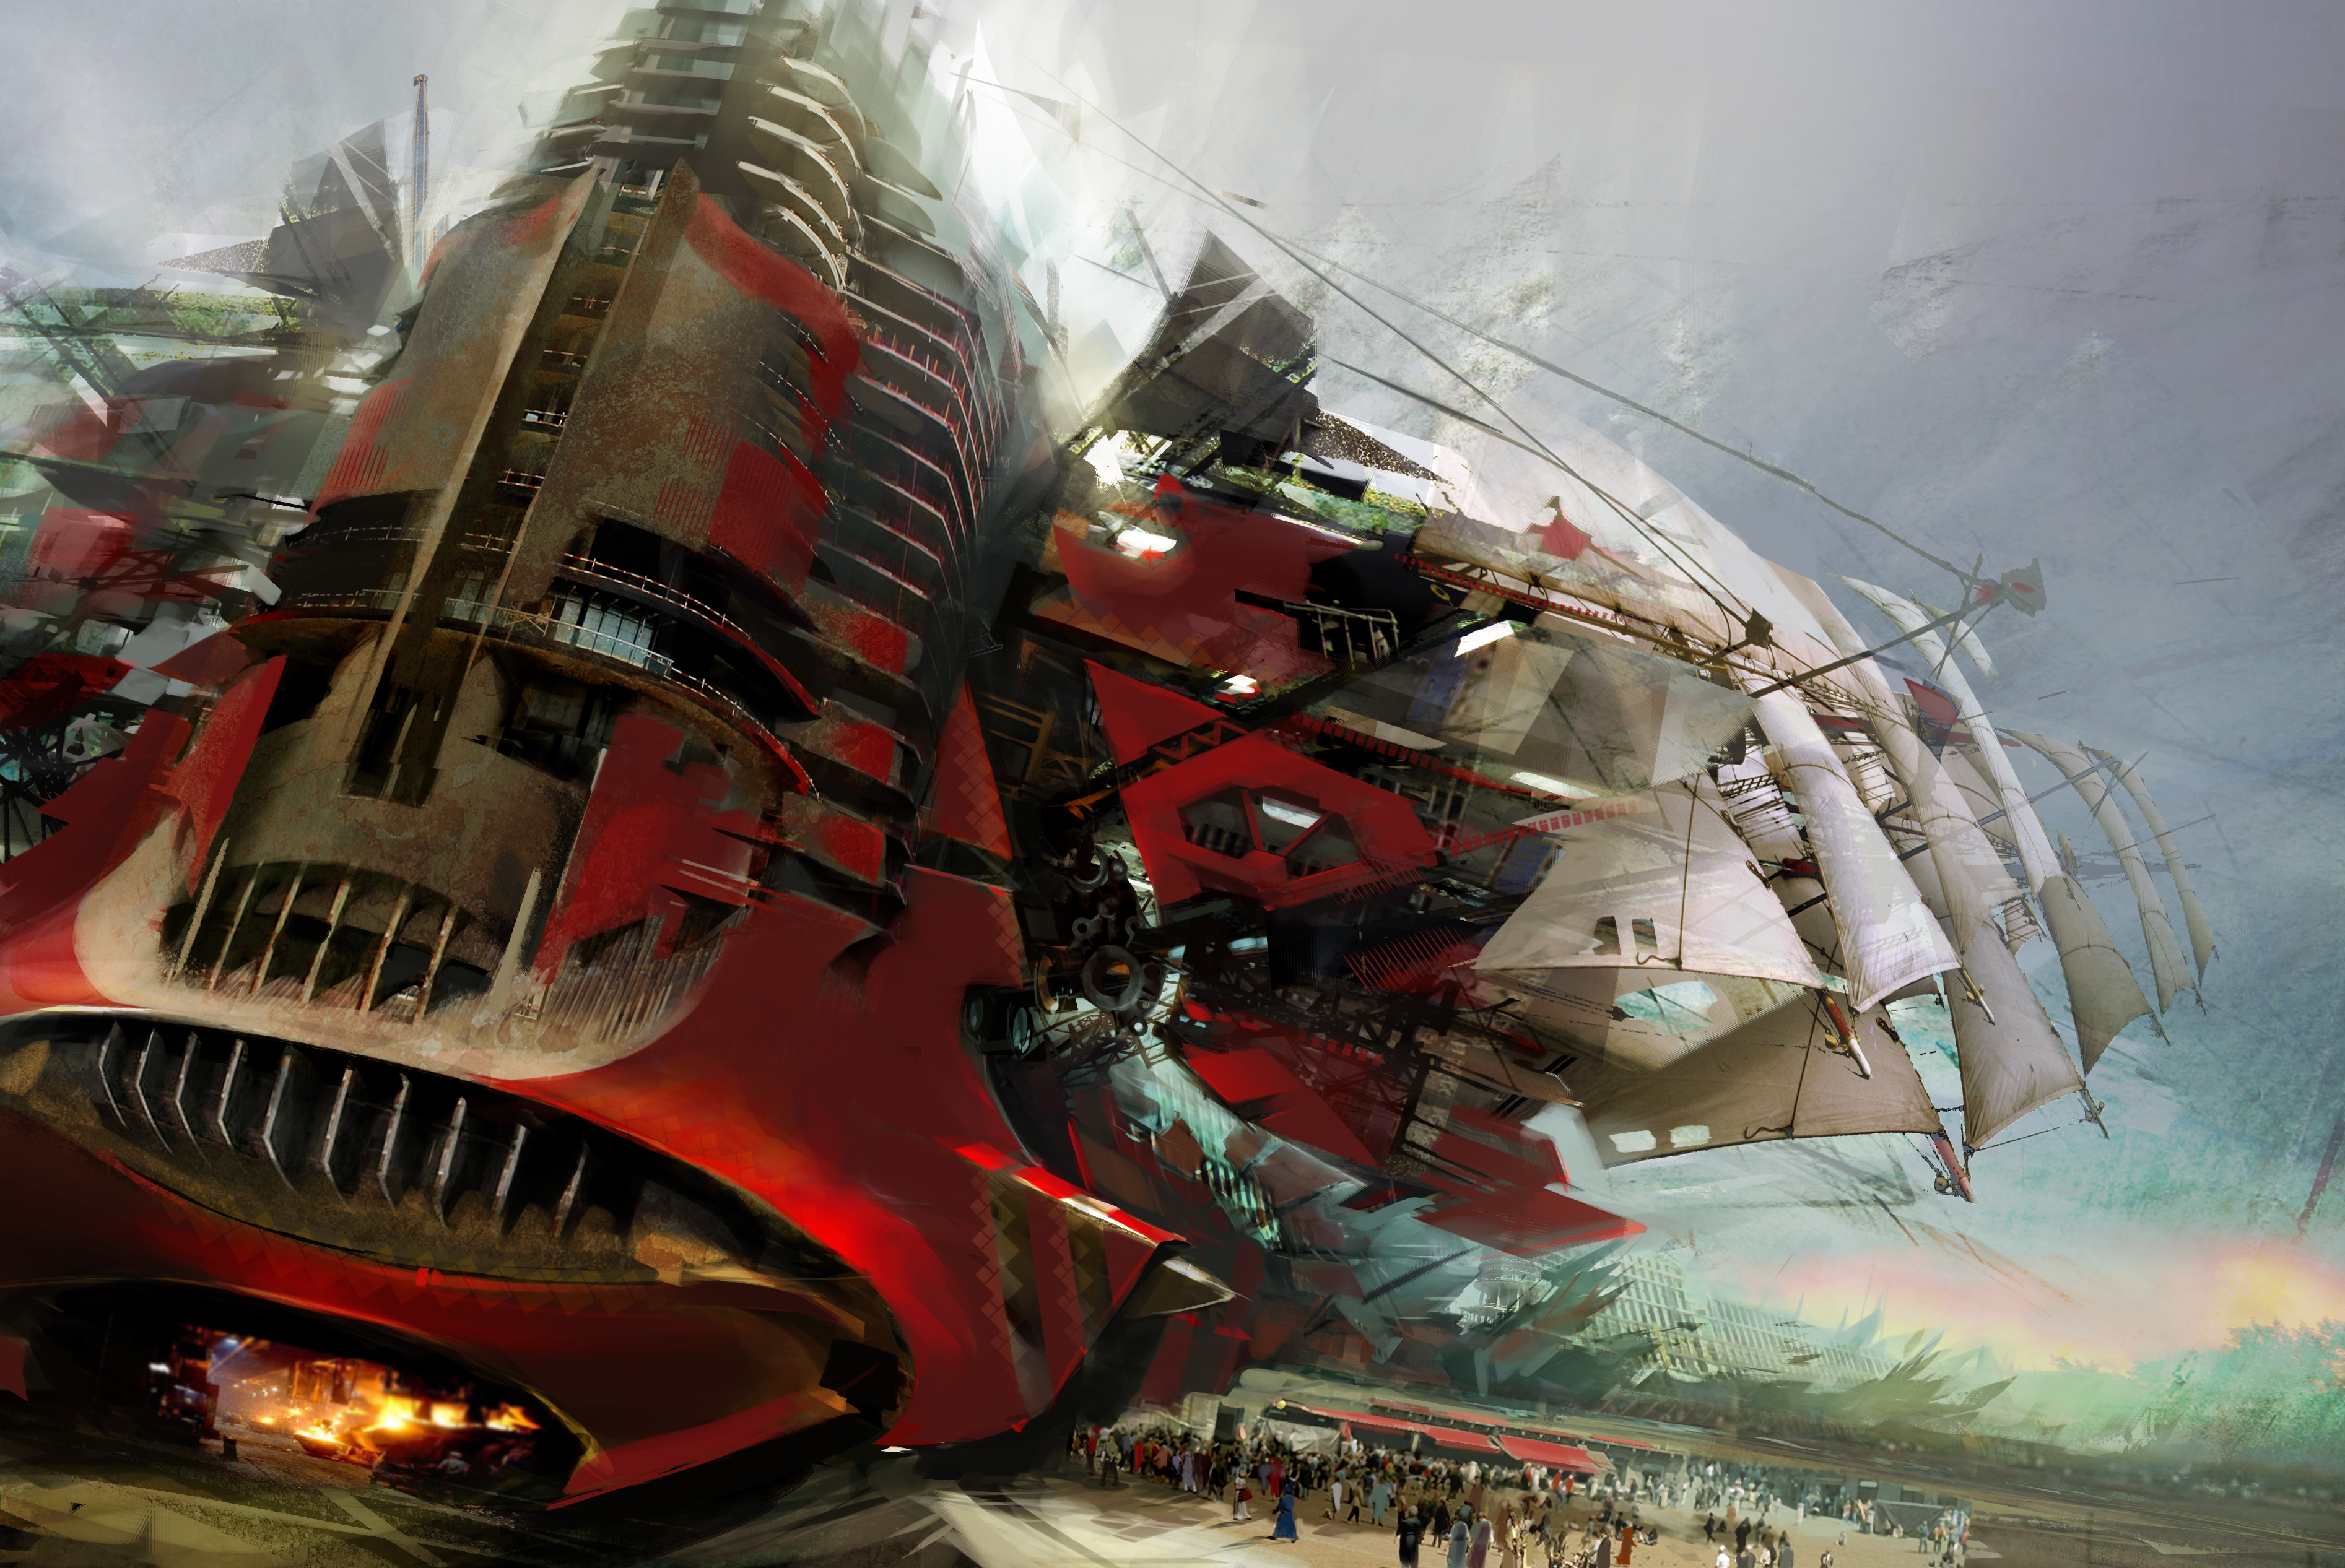 Guild Wars, concept art, science fiction, artwork, sails, Daniel Dociu - desktop wallpaper